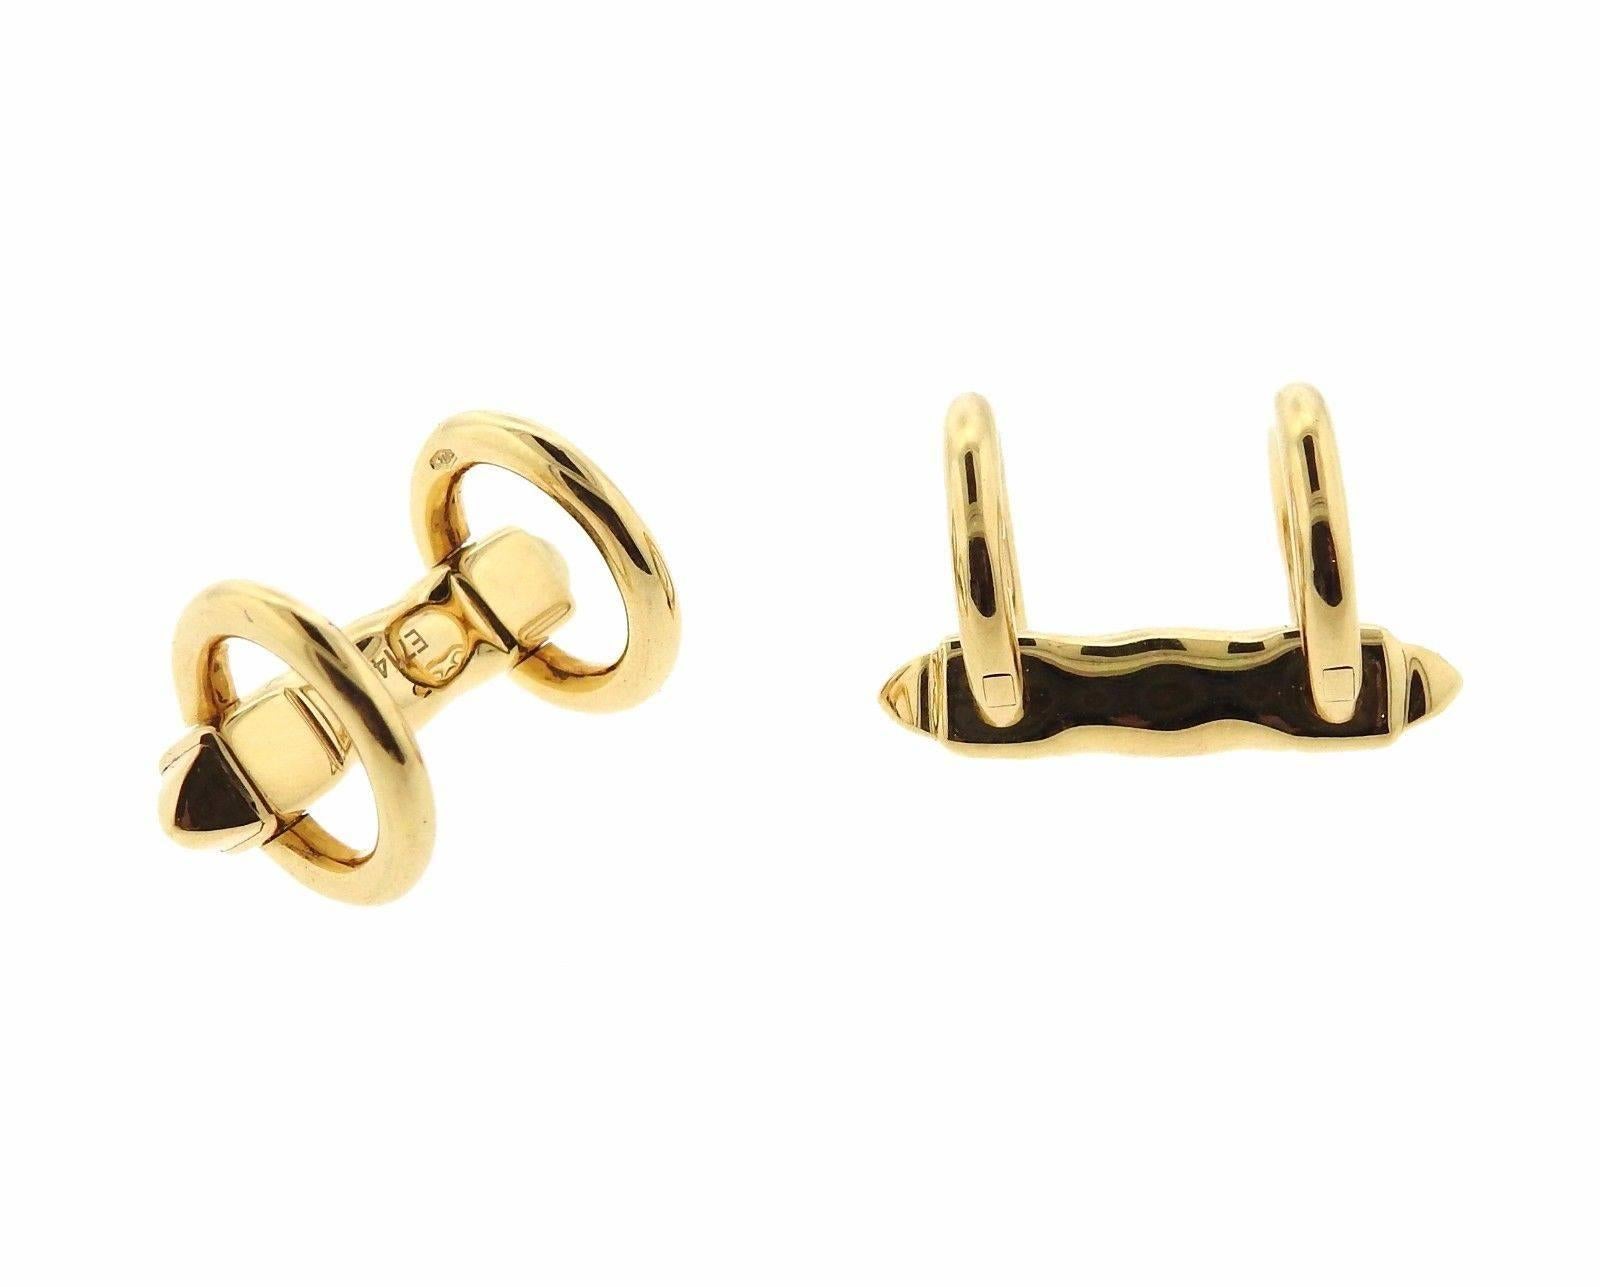 A pair of 18k gold horsebit cufflinks crafted by Cartier. Cufflink tops measure 13mm in diameter, marked Cartier E71462. Weight is 11.9 grams.